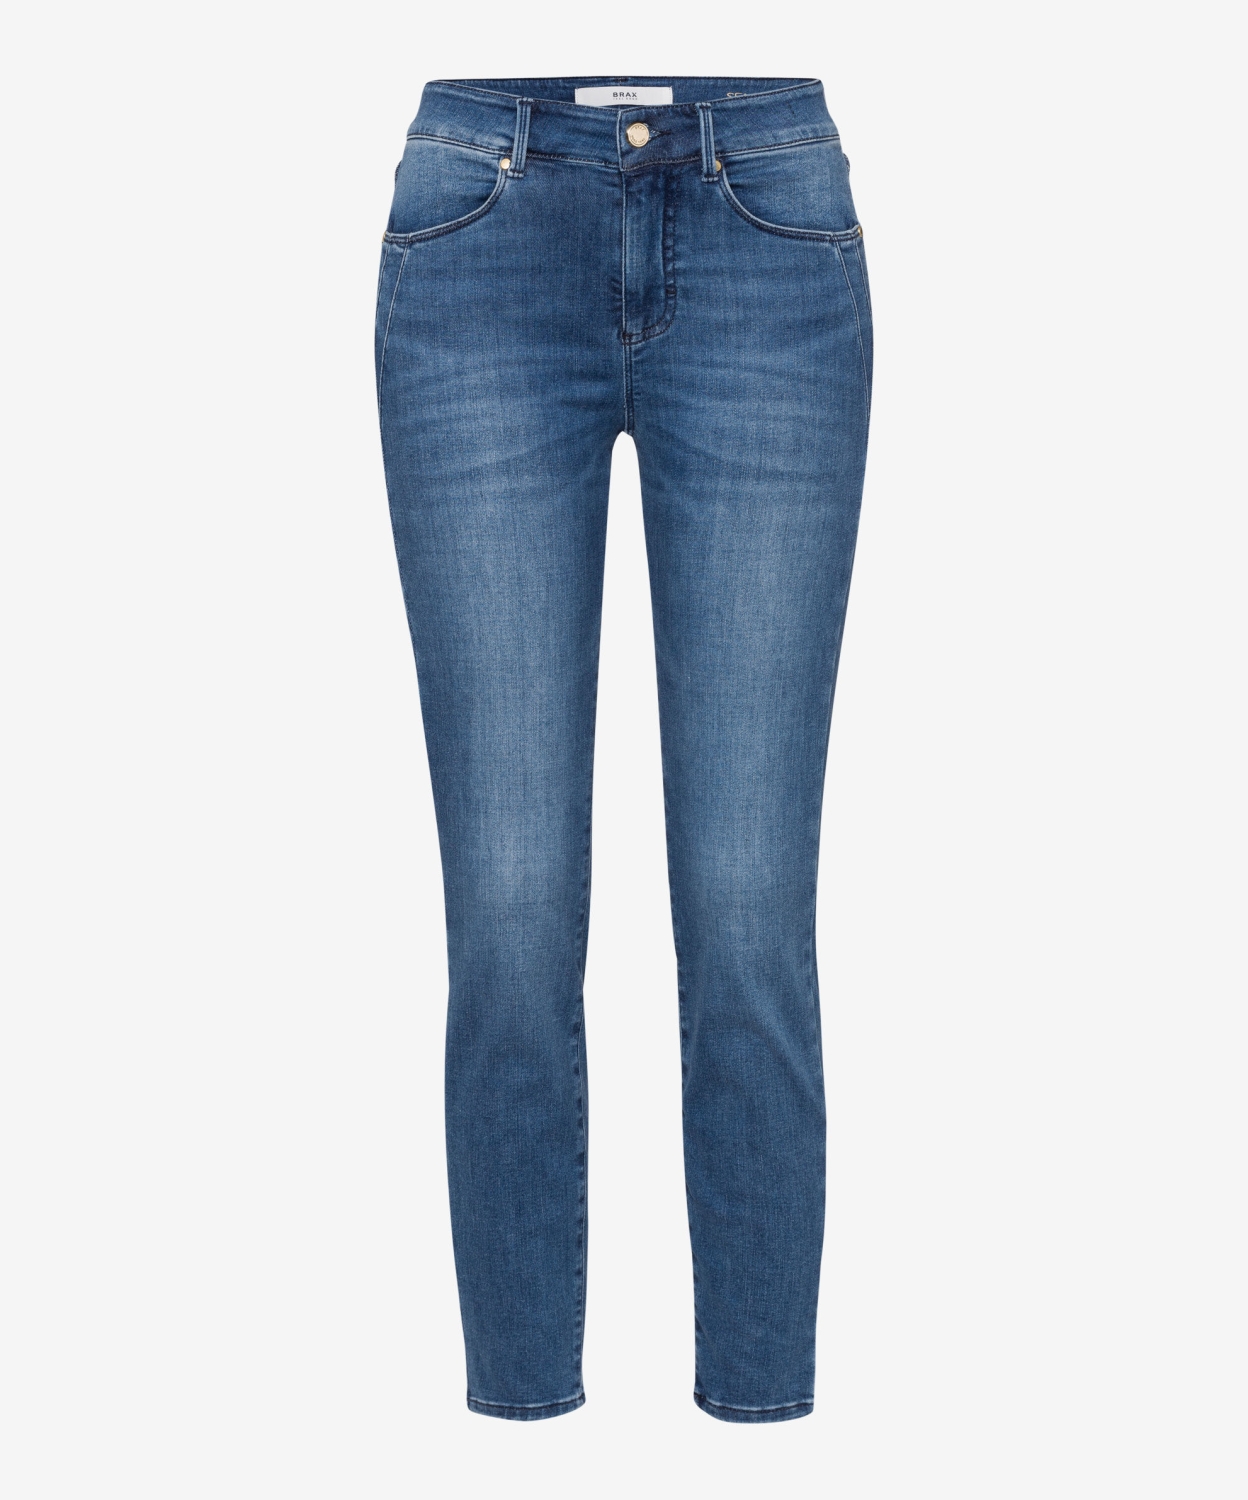 Jeans ANA S | 40 | used regular blue | 74-6254 09953820-26-40